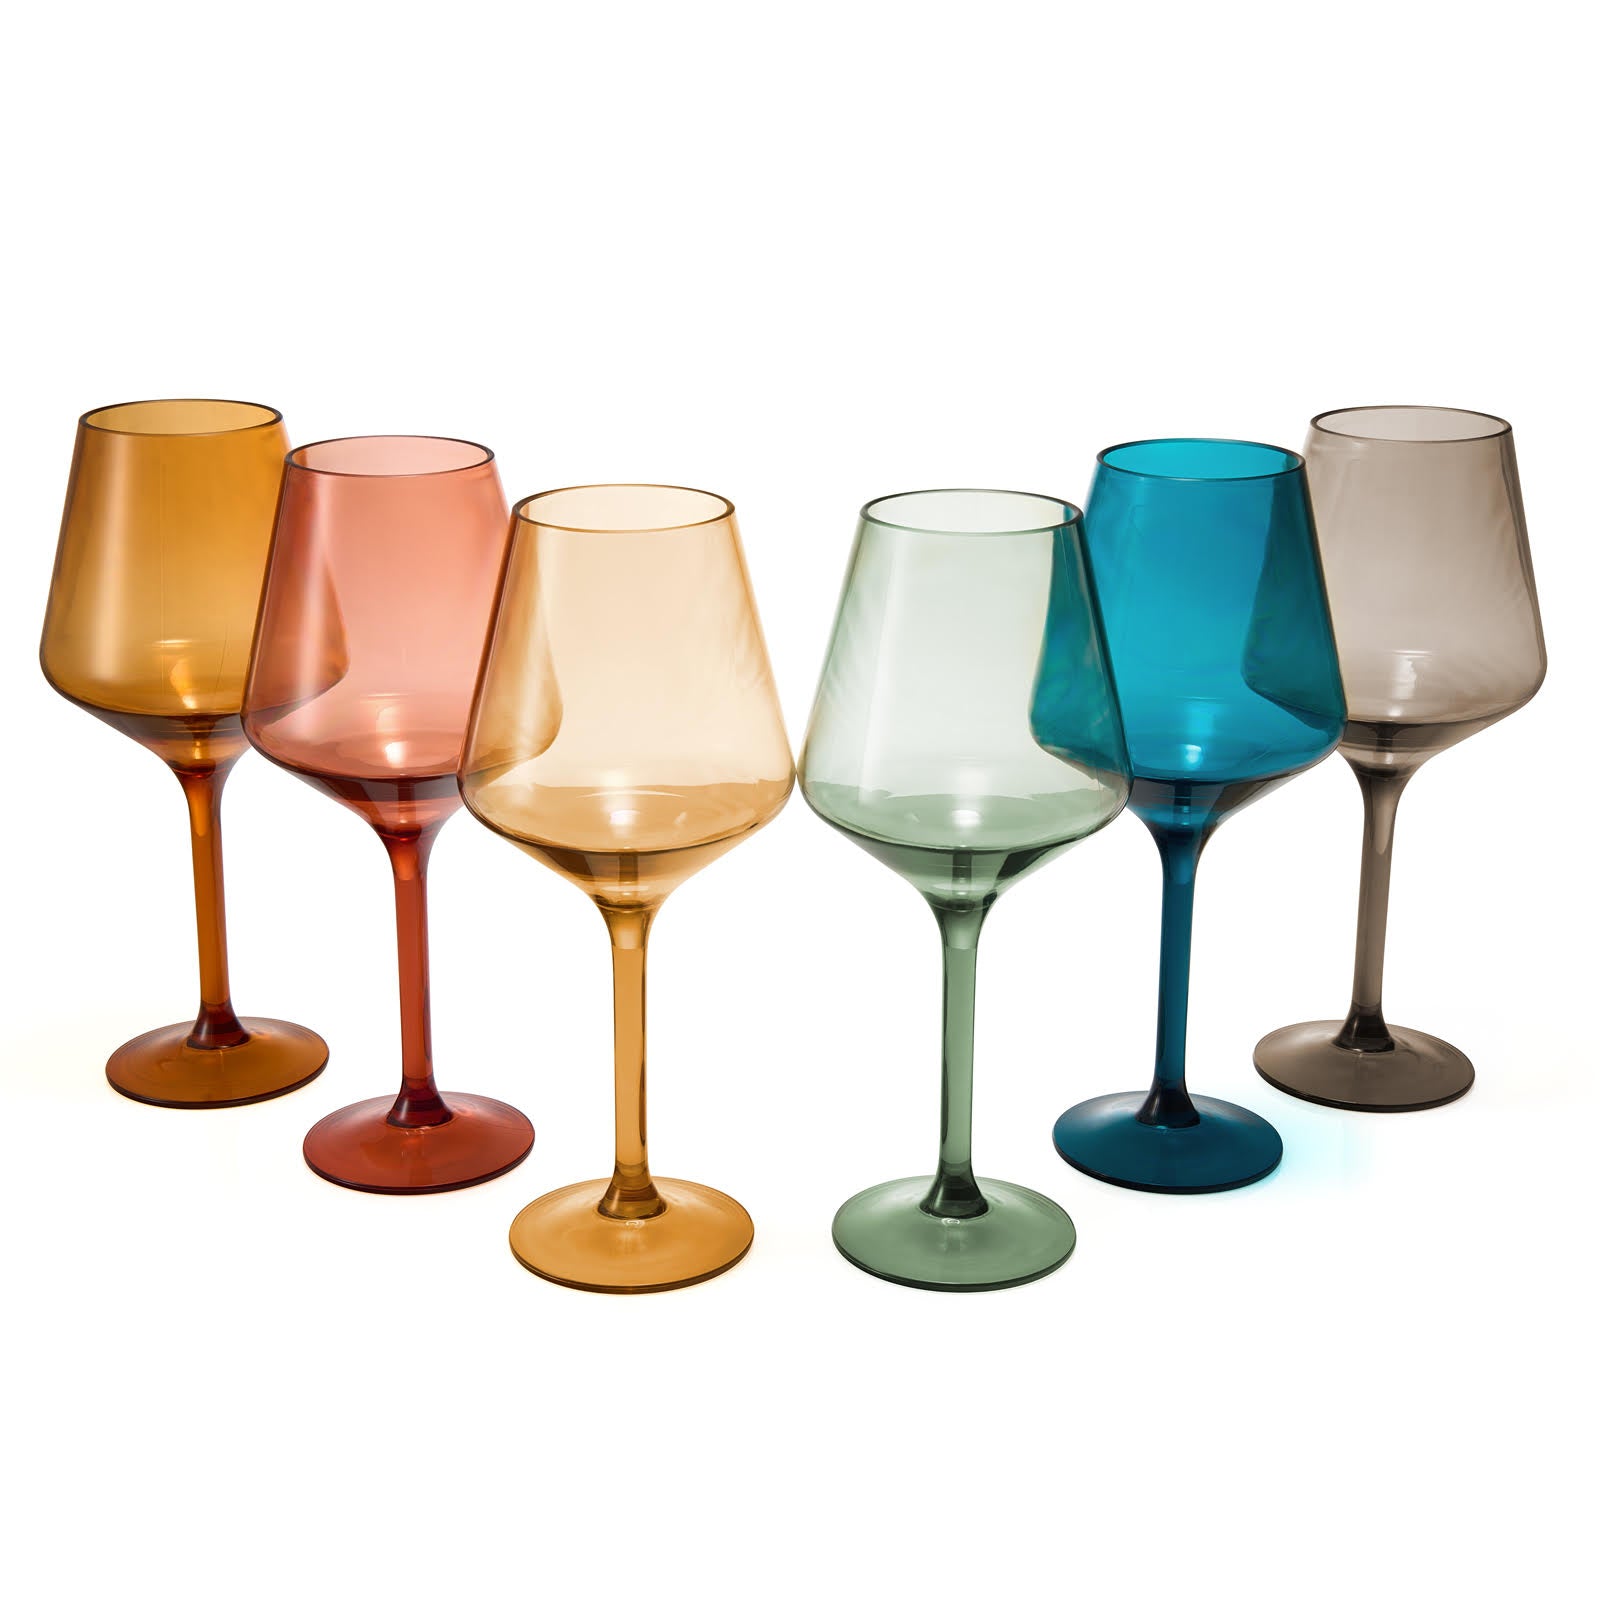 SET SAIL – 4 pack Shatterproof Designer Wine Glasses – Small Town Trendz